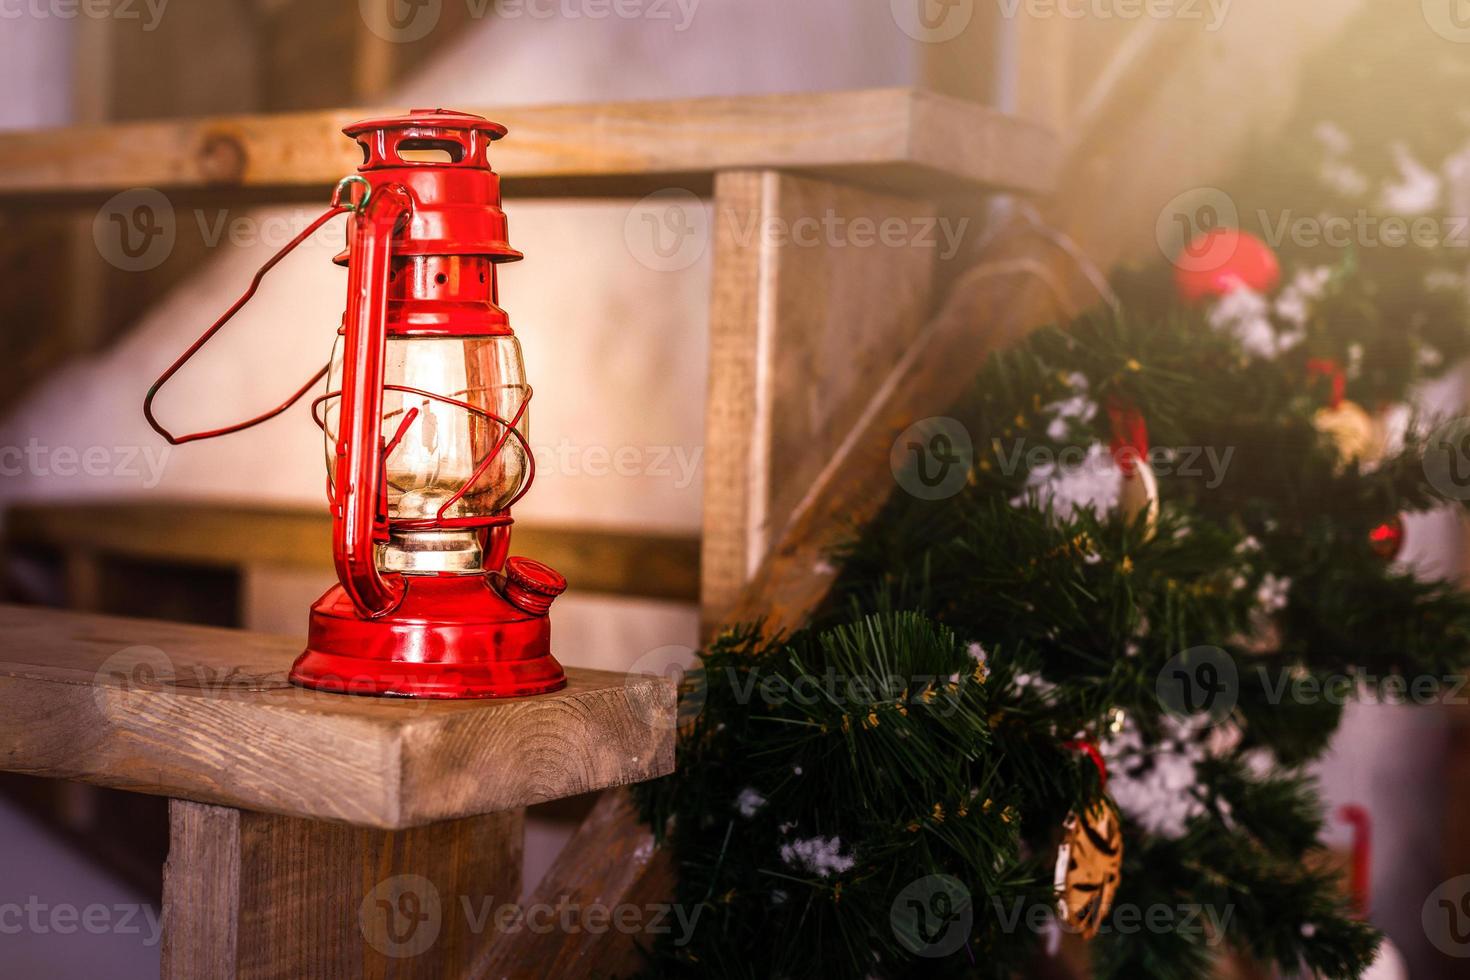 Kerstmis decoratie kaart met wijnoogst Kerstmis speelgoed boom takken kerosine olie lamp foto